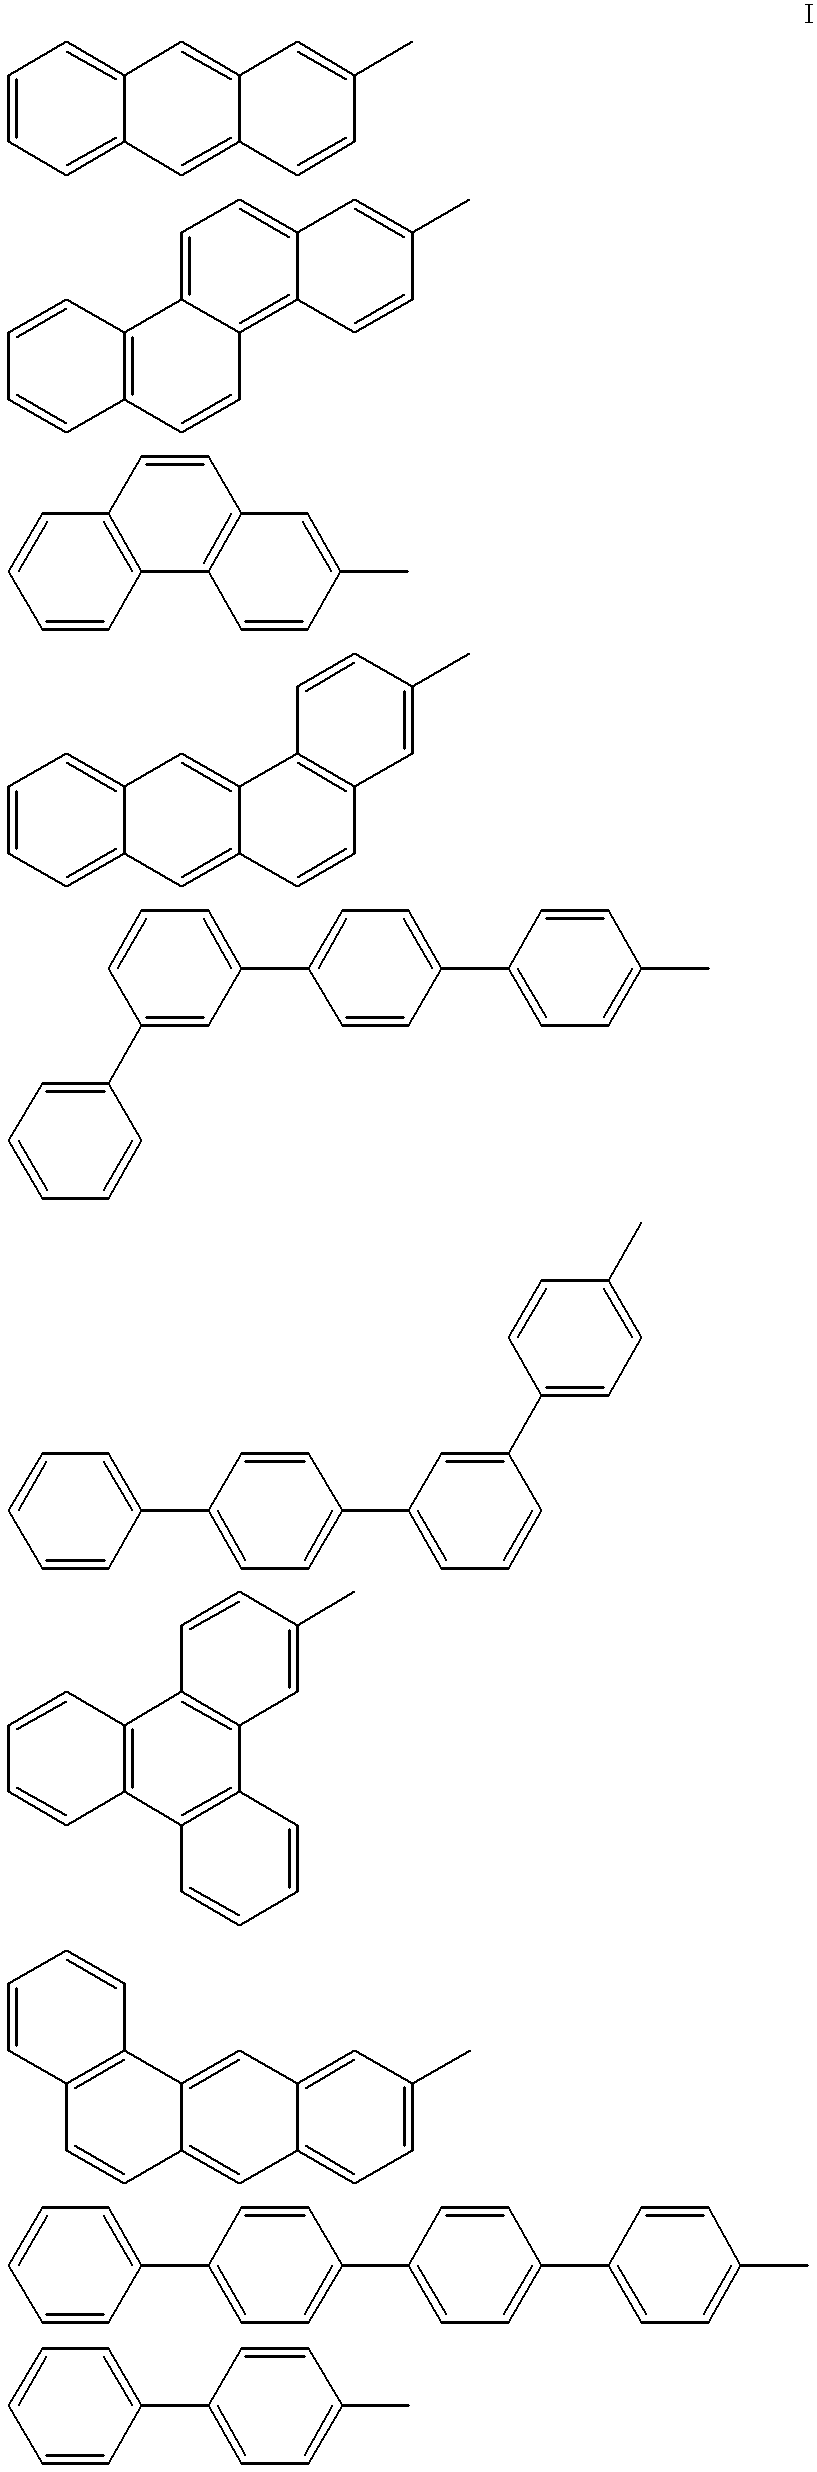 Polymerization process for olefin copolymers using bridged hafnocene compounds